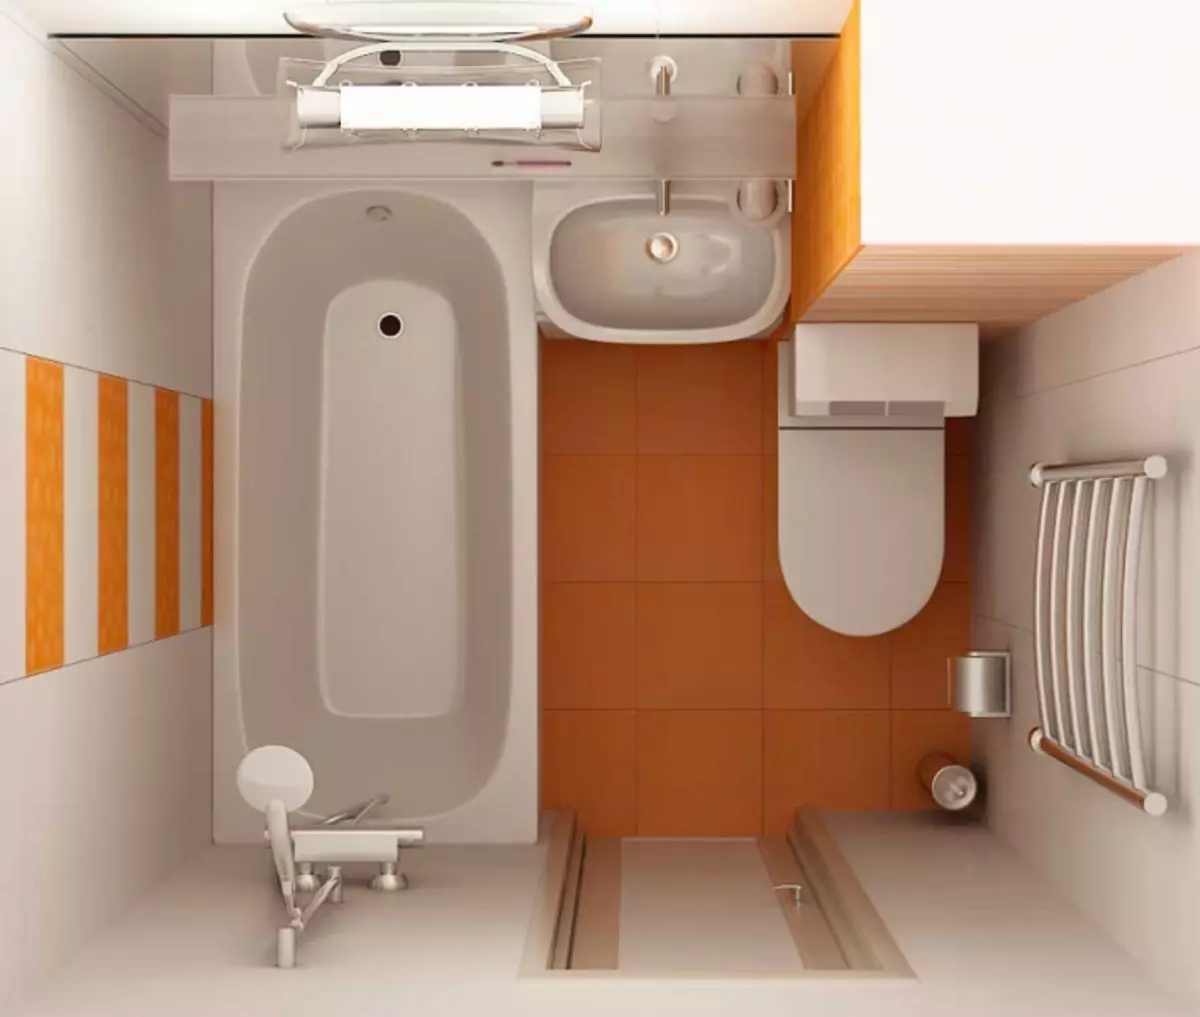 Desain kamar mandi di Khrushchev: Pendekatan anu kompeten